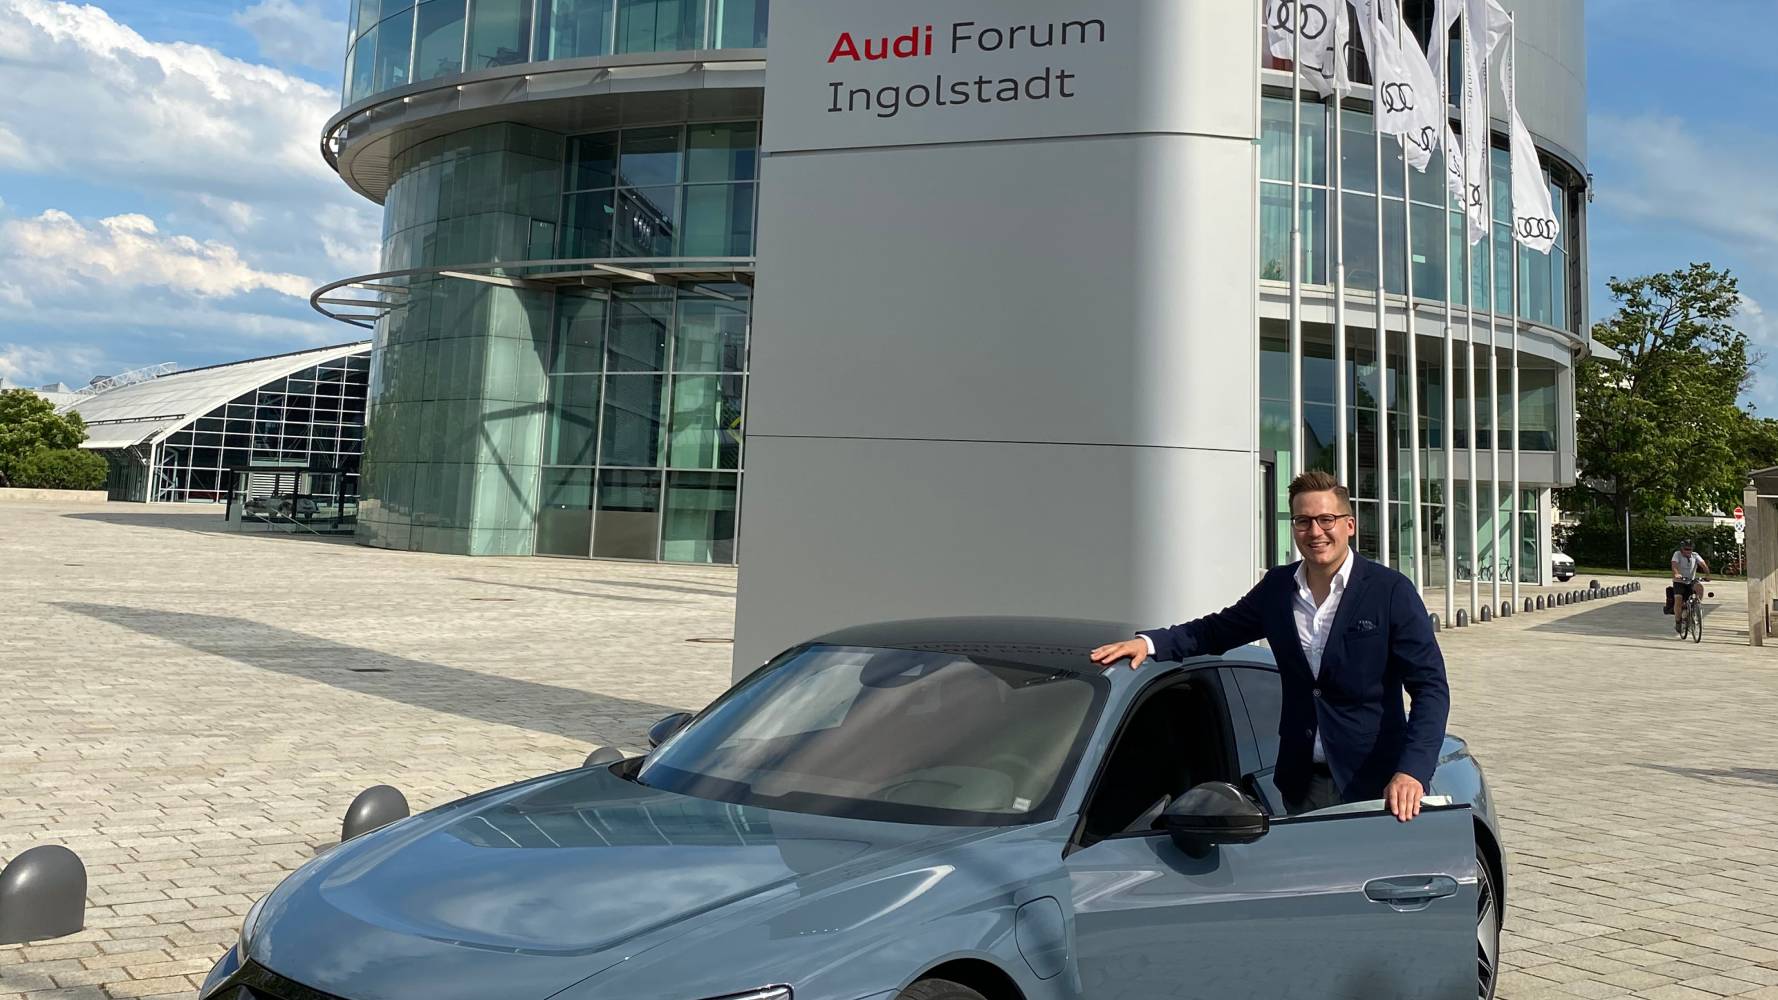 In our interview, alumnus Luca Strobel talks about his unique internship at the German car manufactuerer Audi.